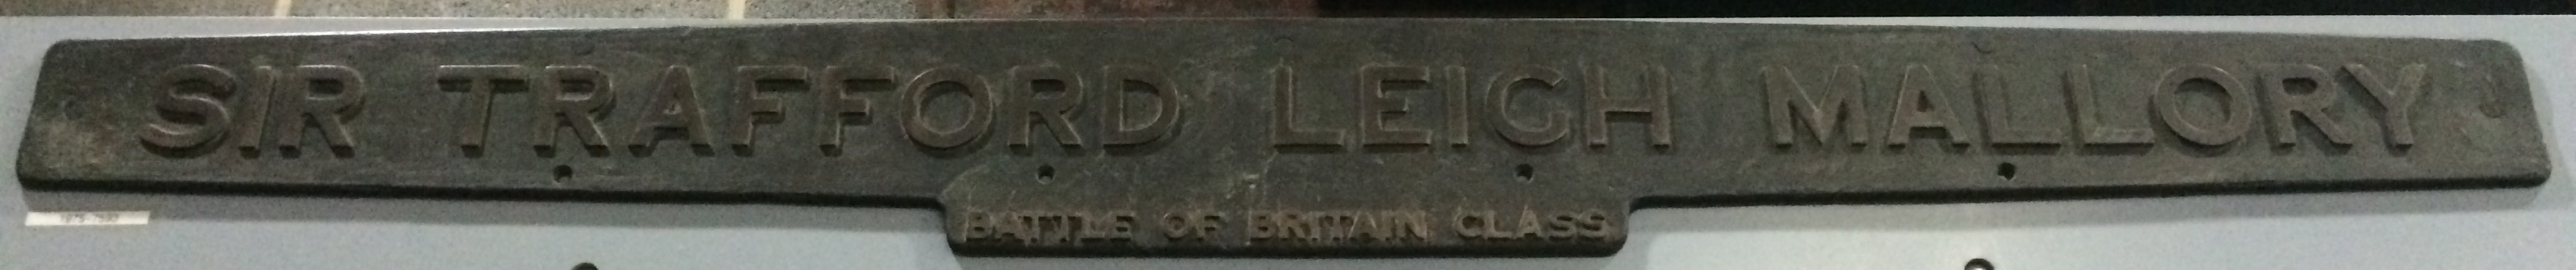 British Railways, "Sir Trafford Leigh Mallory", ex Battle of Britain Class nameplate (1975-7593)